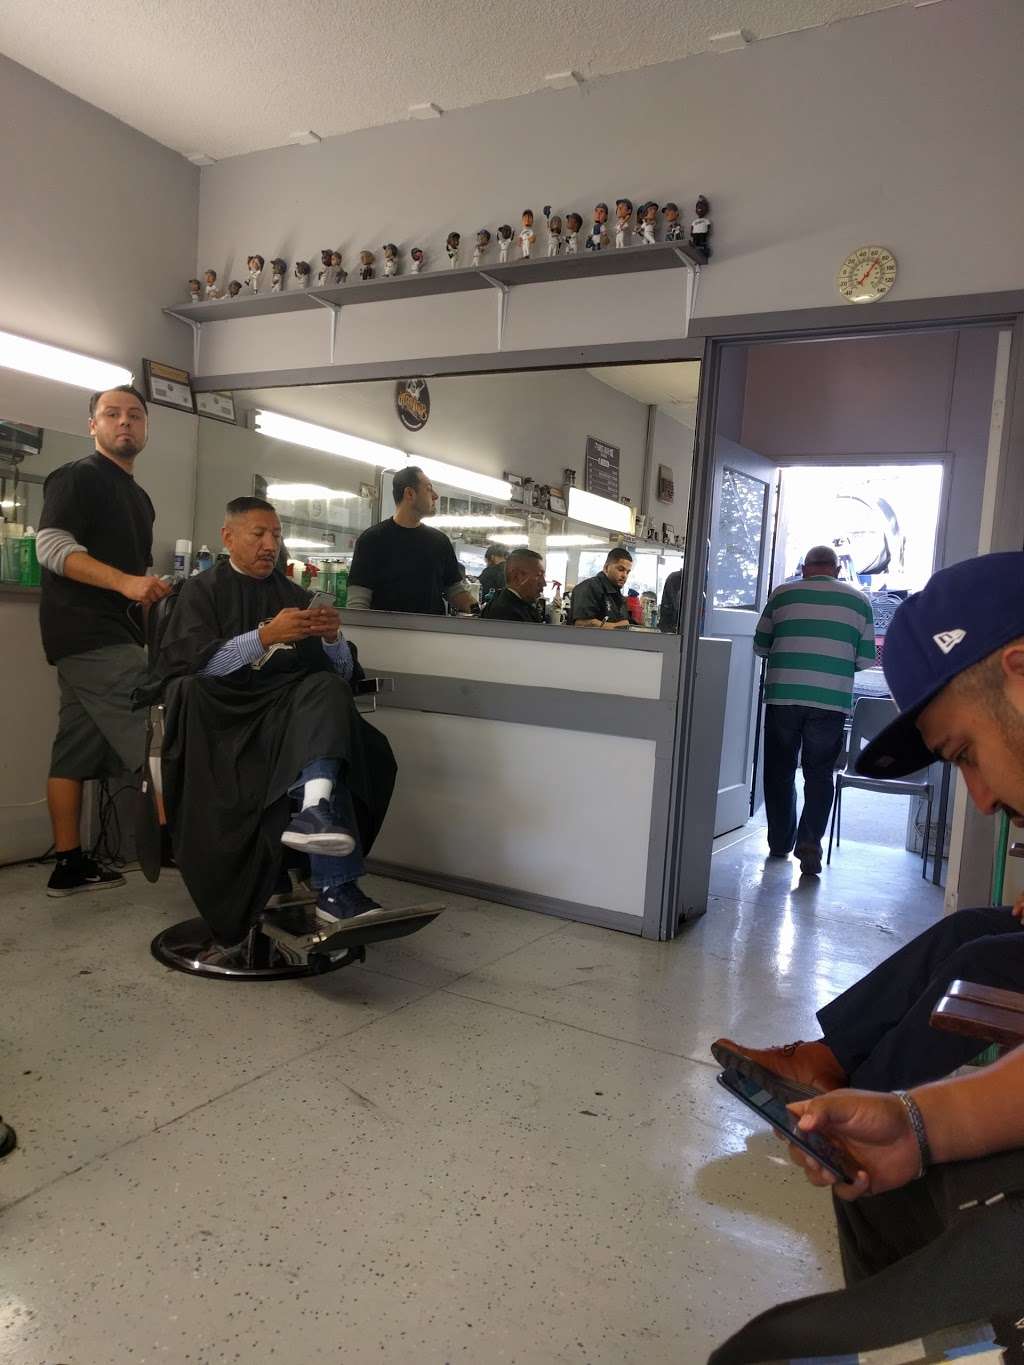 Hair Zone Barber Shop | 5673 York Blvd, Los Angeles, CA 90042, USA | Phone: (323) 456-2573